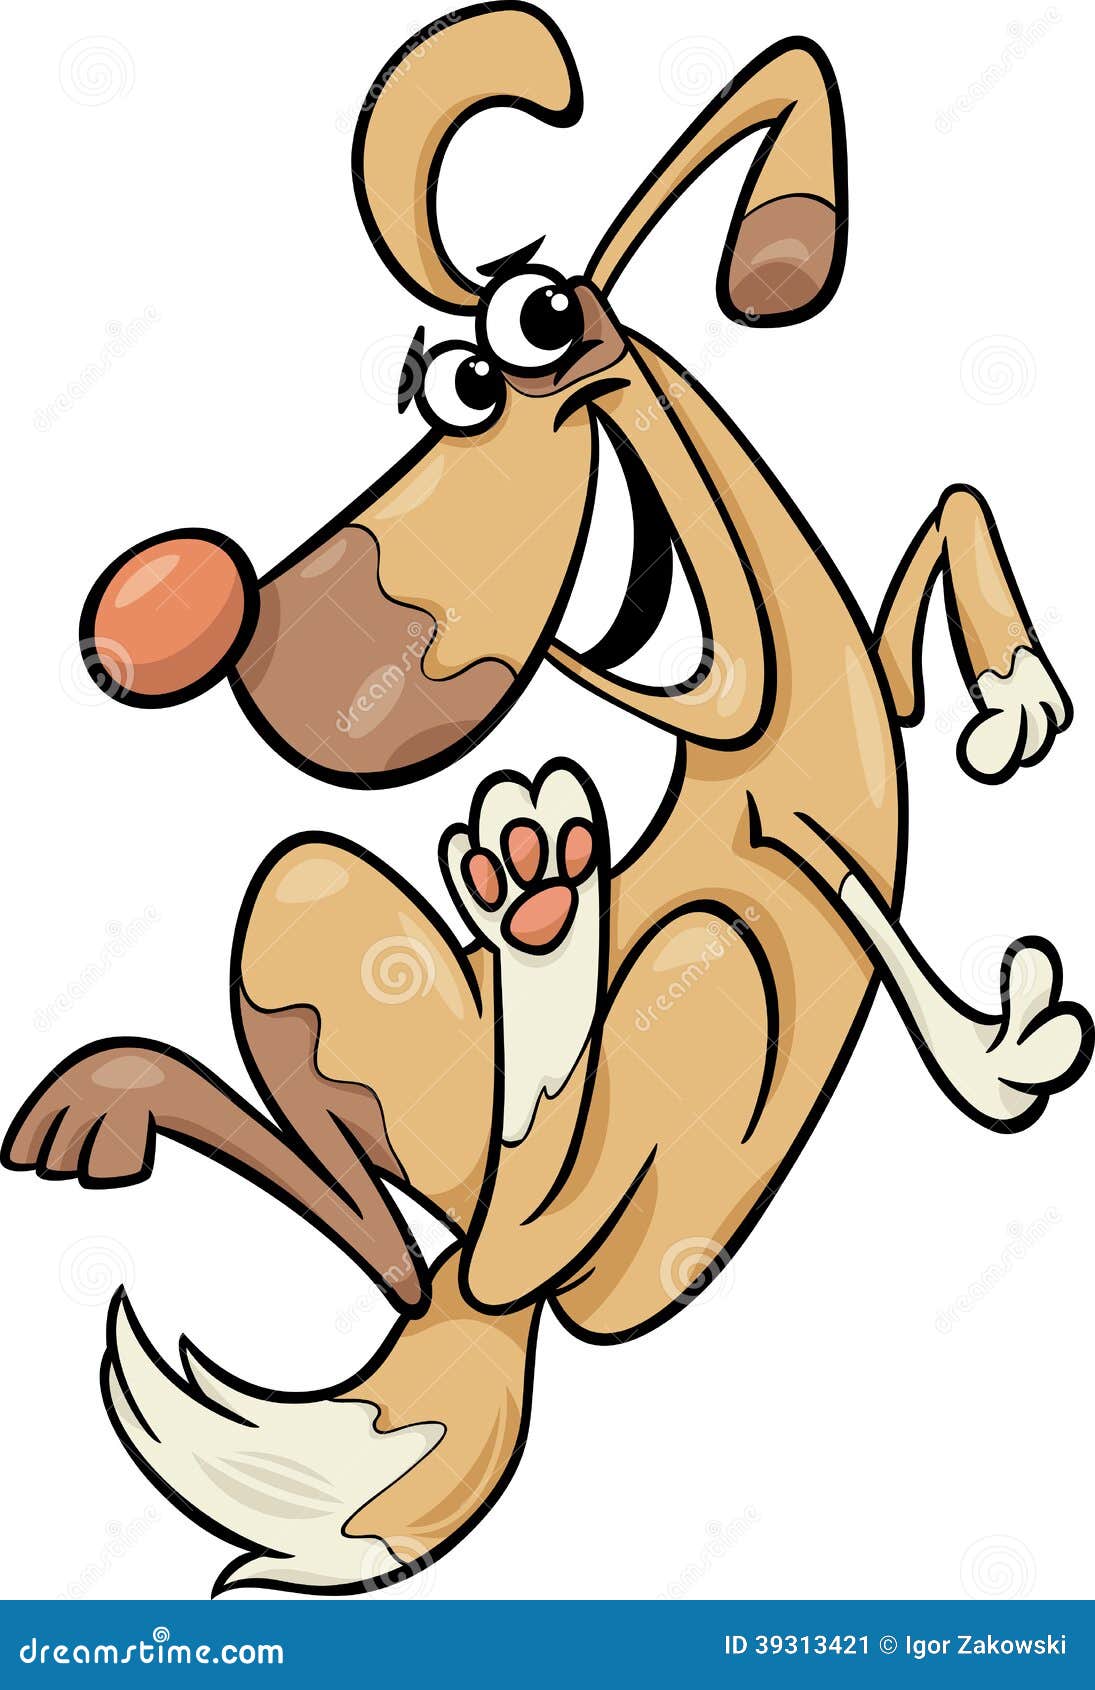 Funny Dog Cartoon Illustration Stock Vector - Image: 39313421